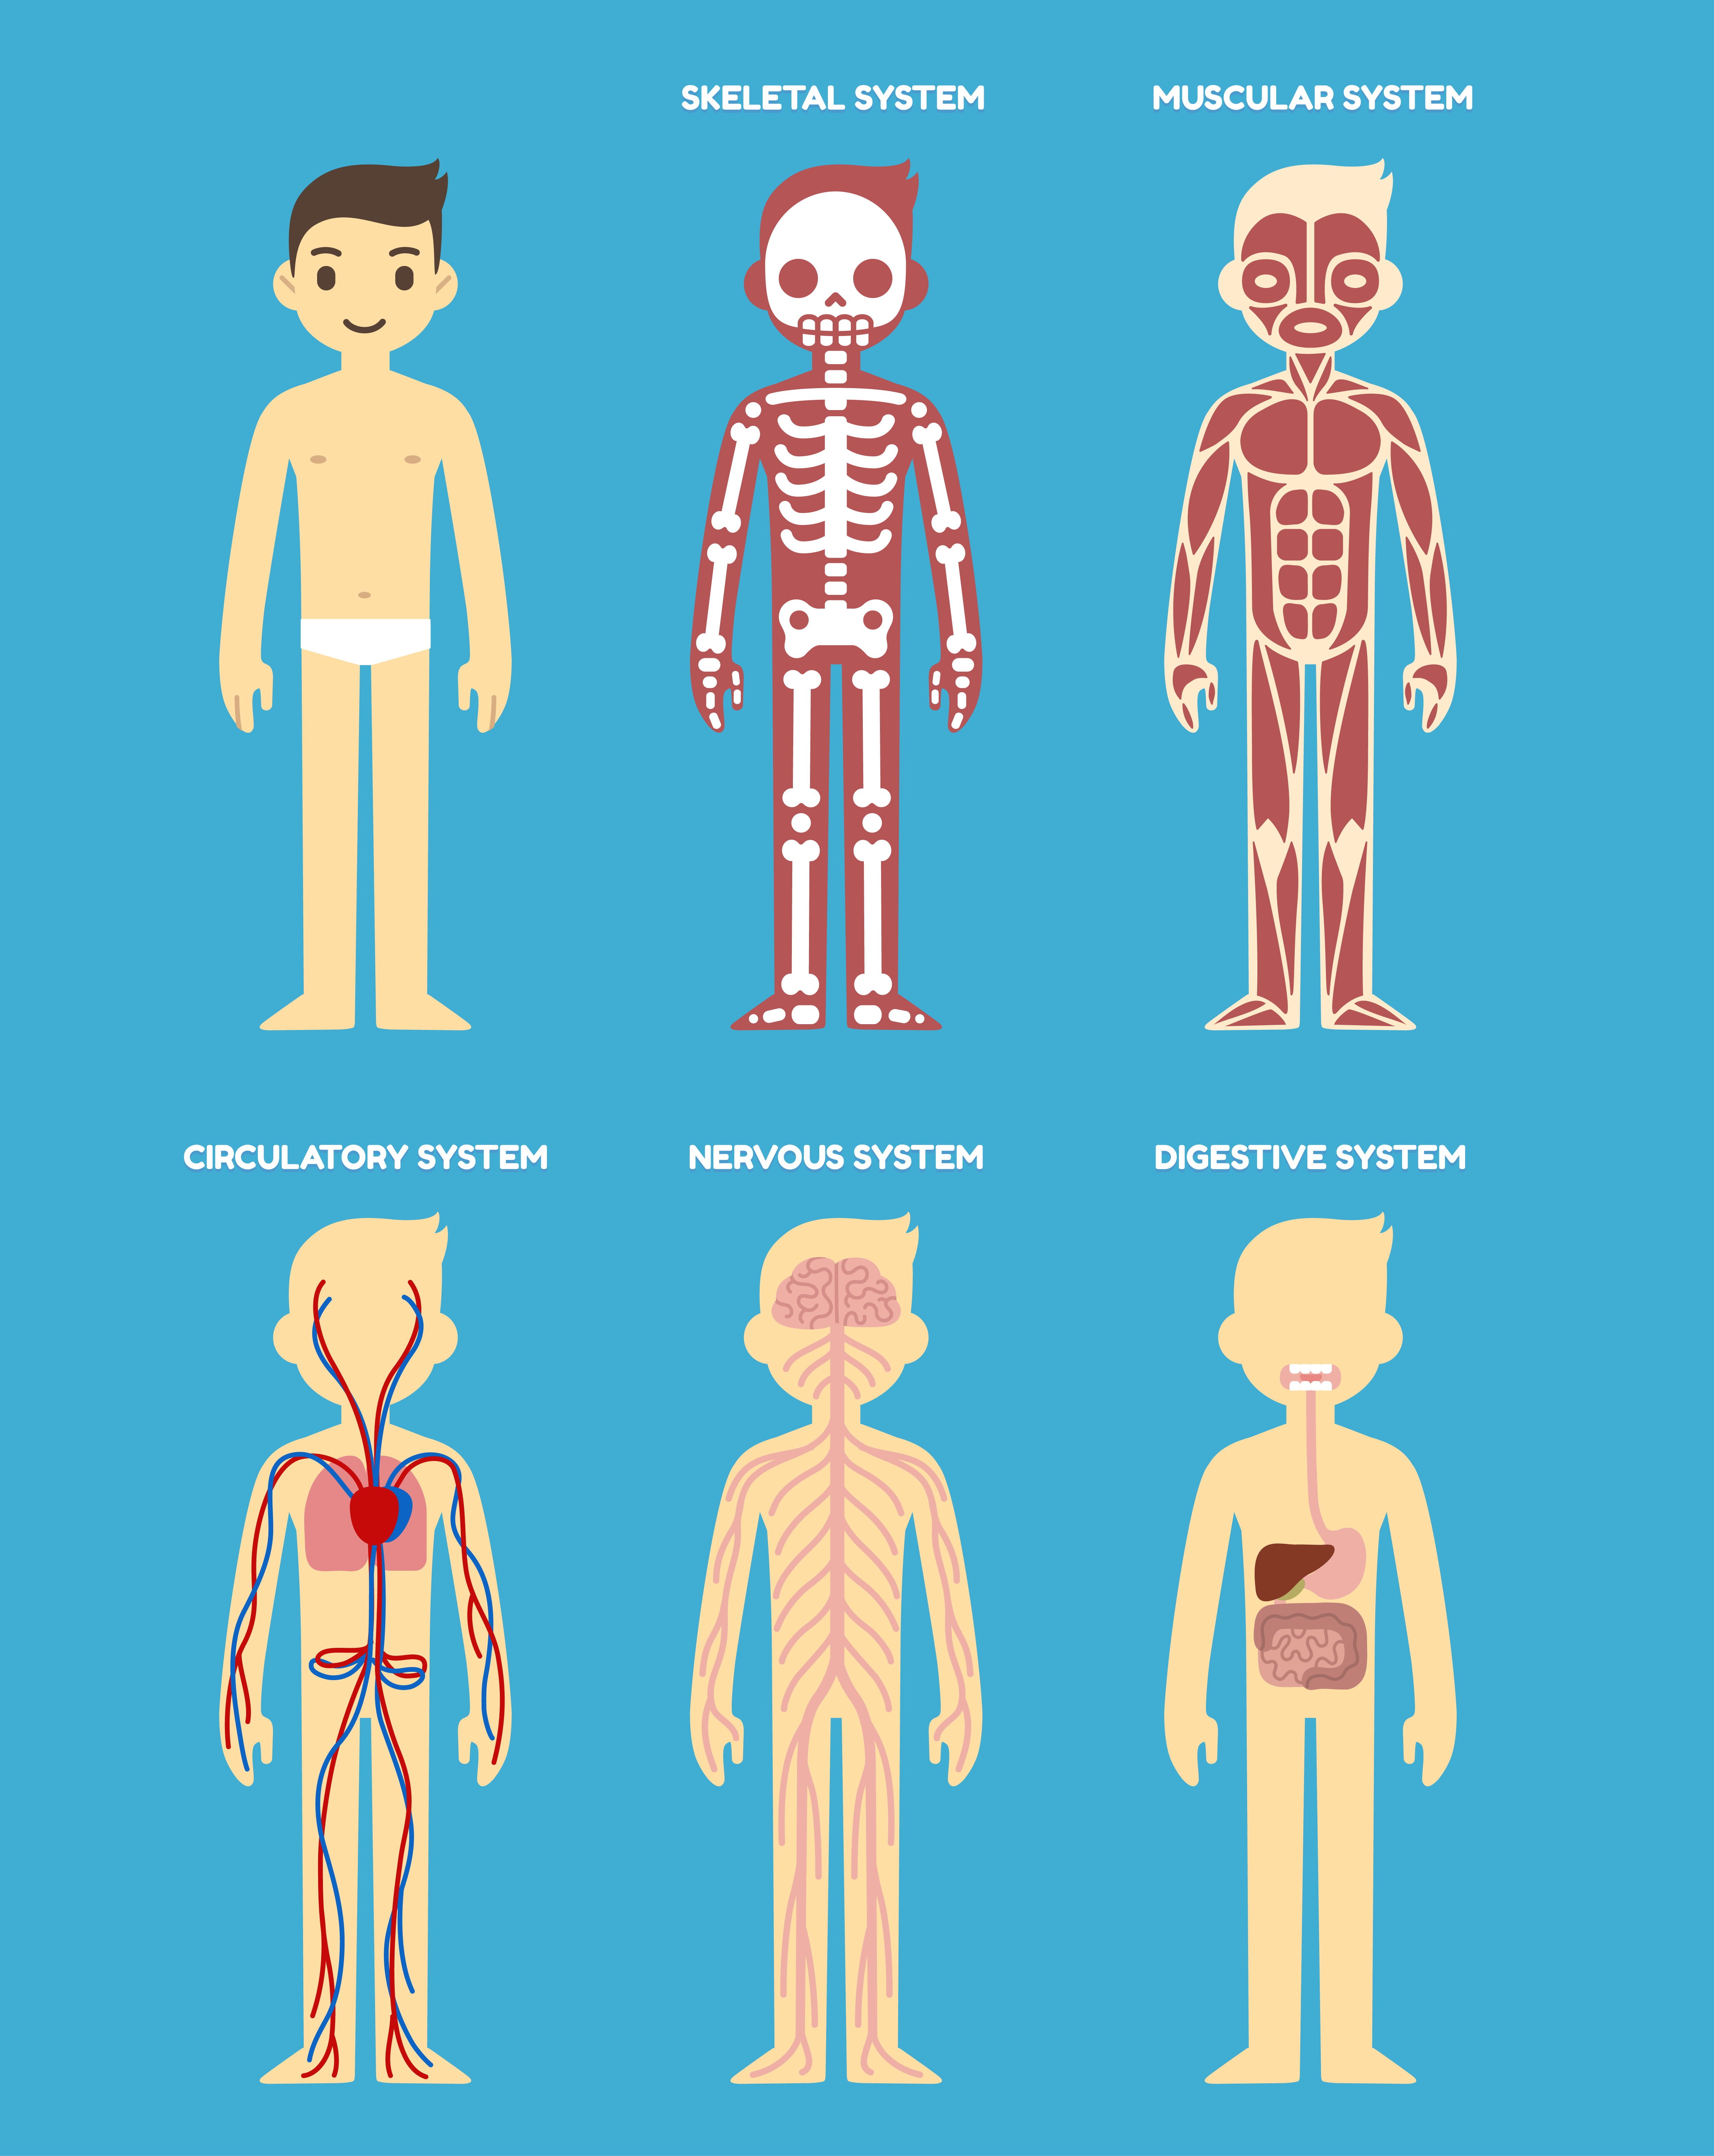 Stylized human body anatomy chart: skeletal, muscular, circulatory, nervous and digestive systems. Flat cartoon style.